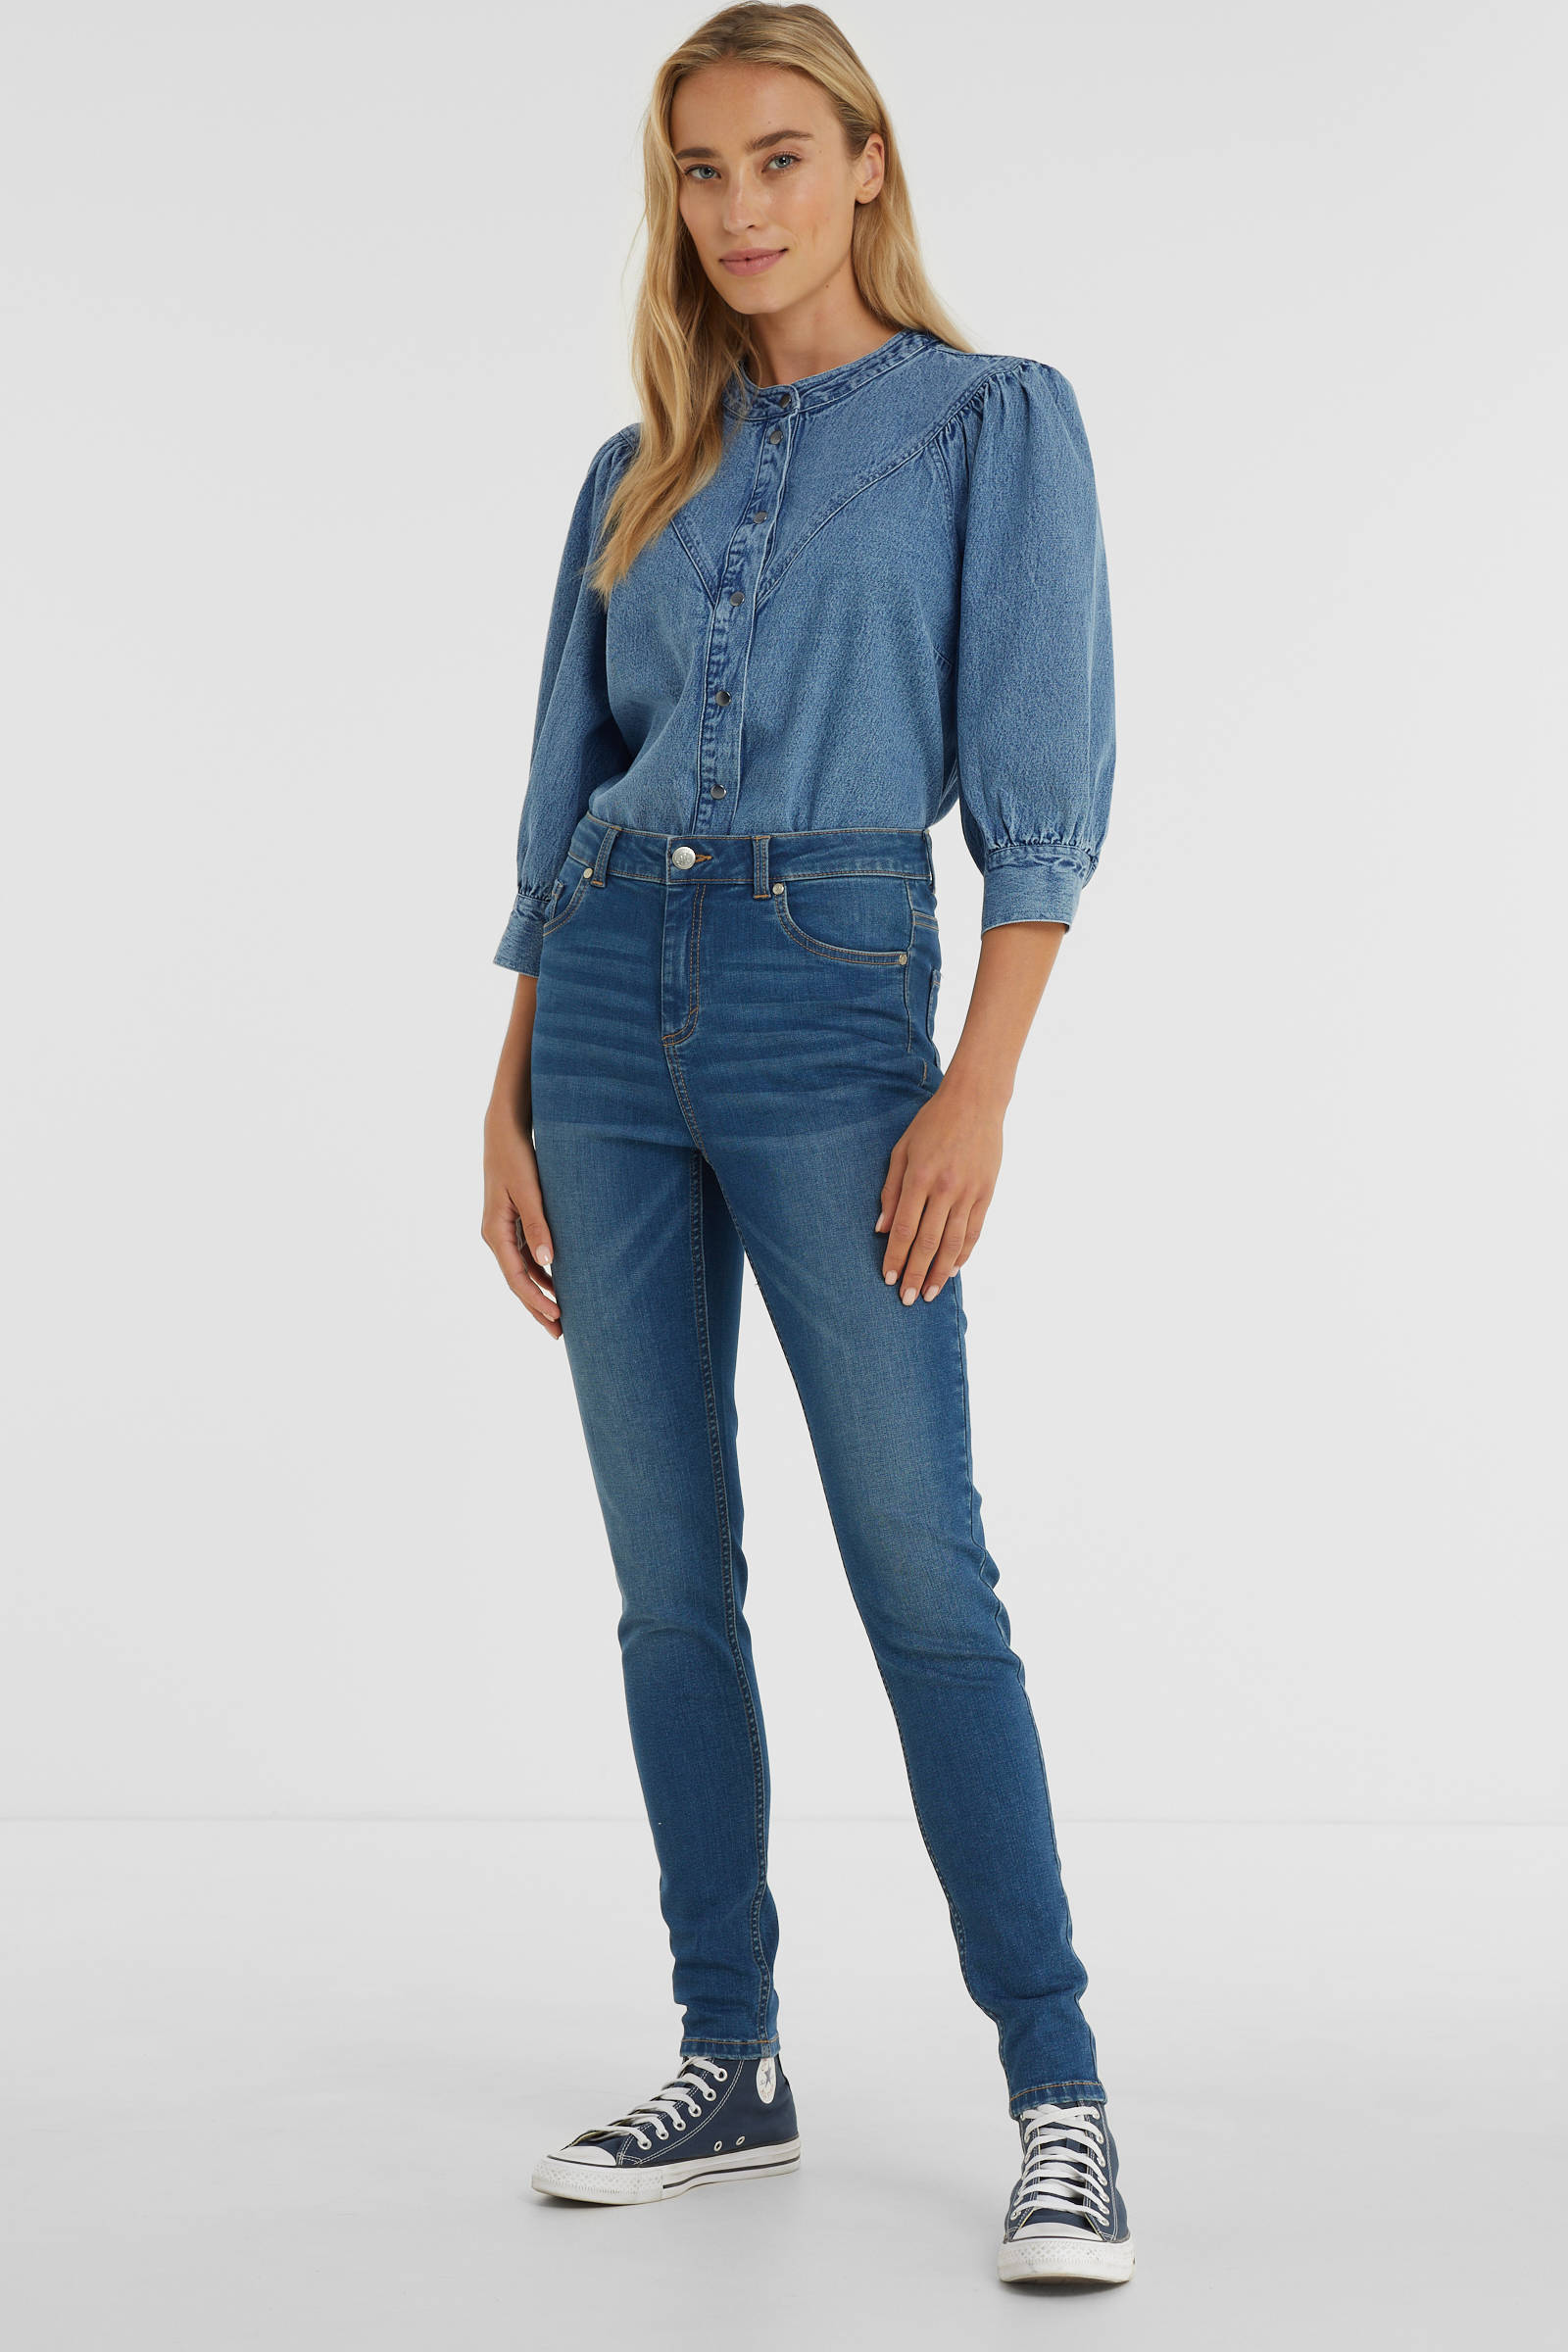 Mode Spijkerbroeken Skinny jeans Julie Skinny jeans blauw glitter-achtig 